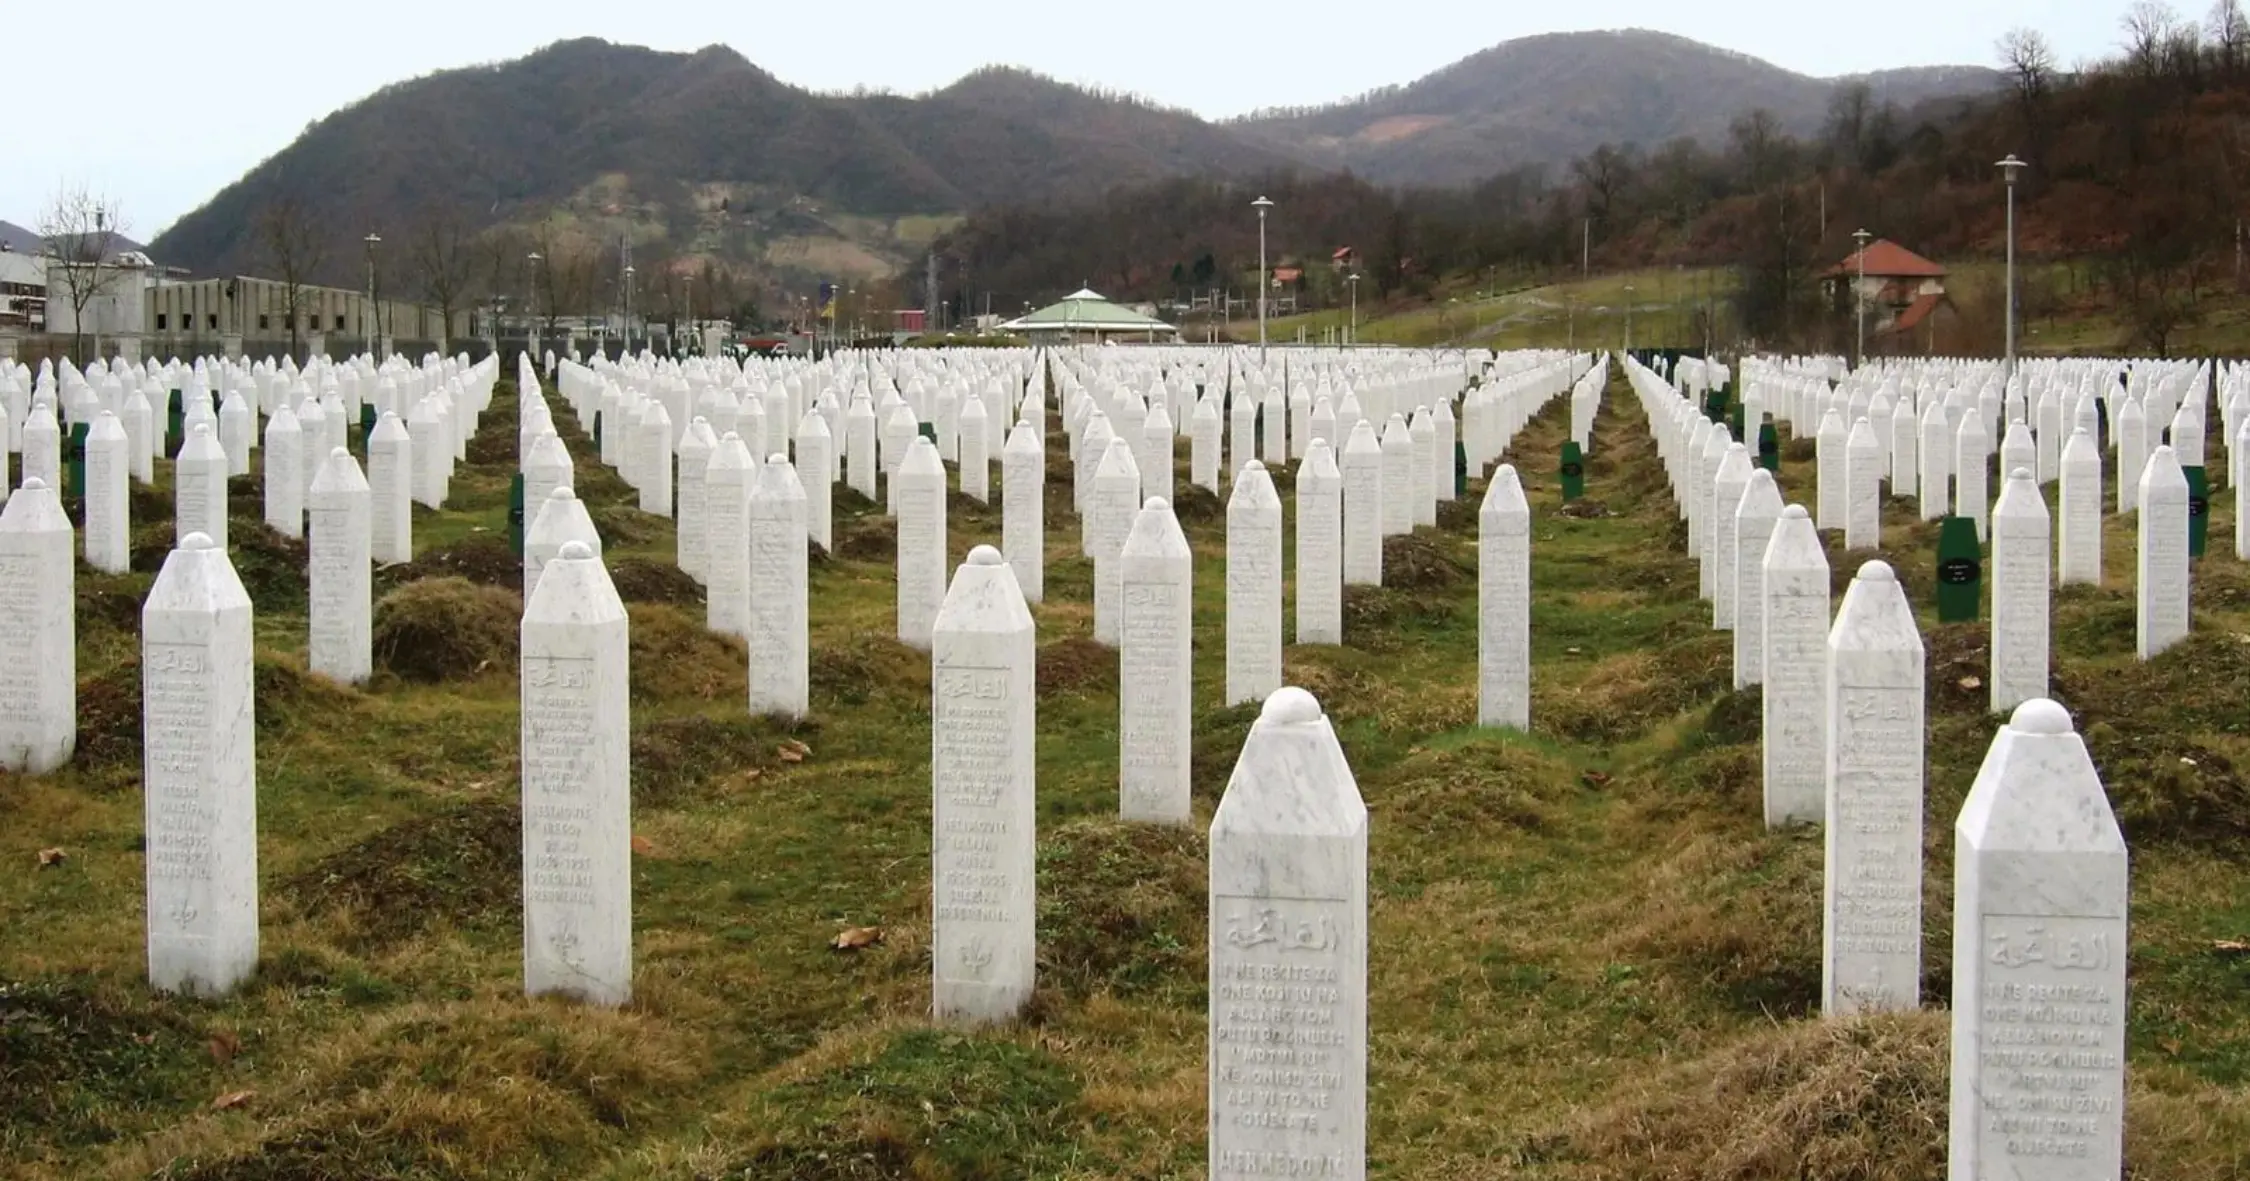 Serbia resists UN plan to commemorate Srebrenica genocide